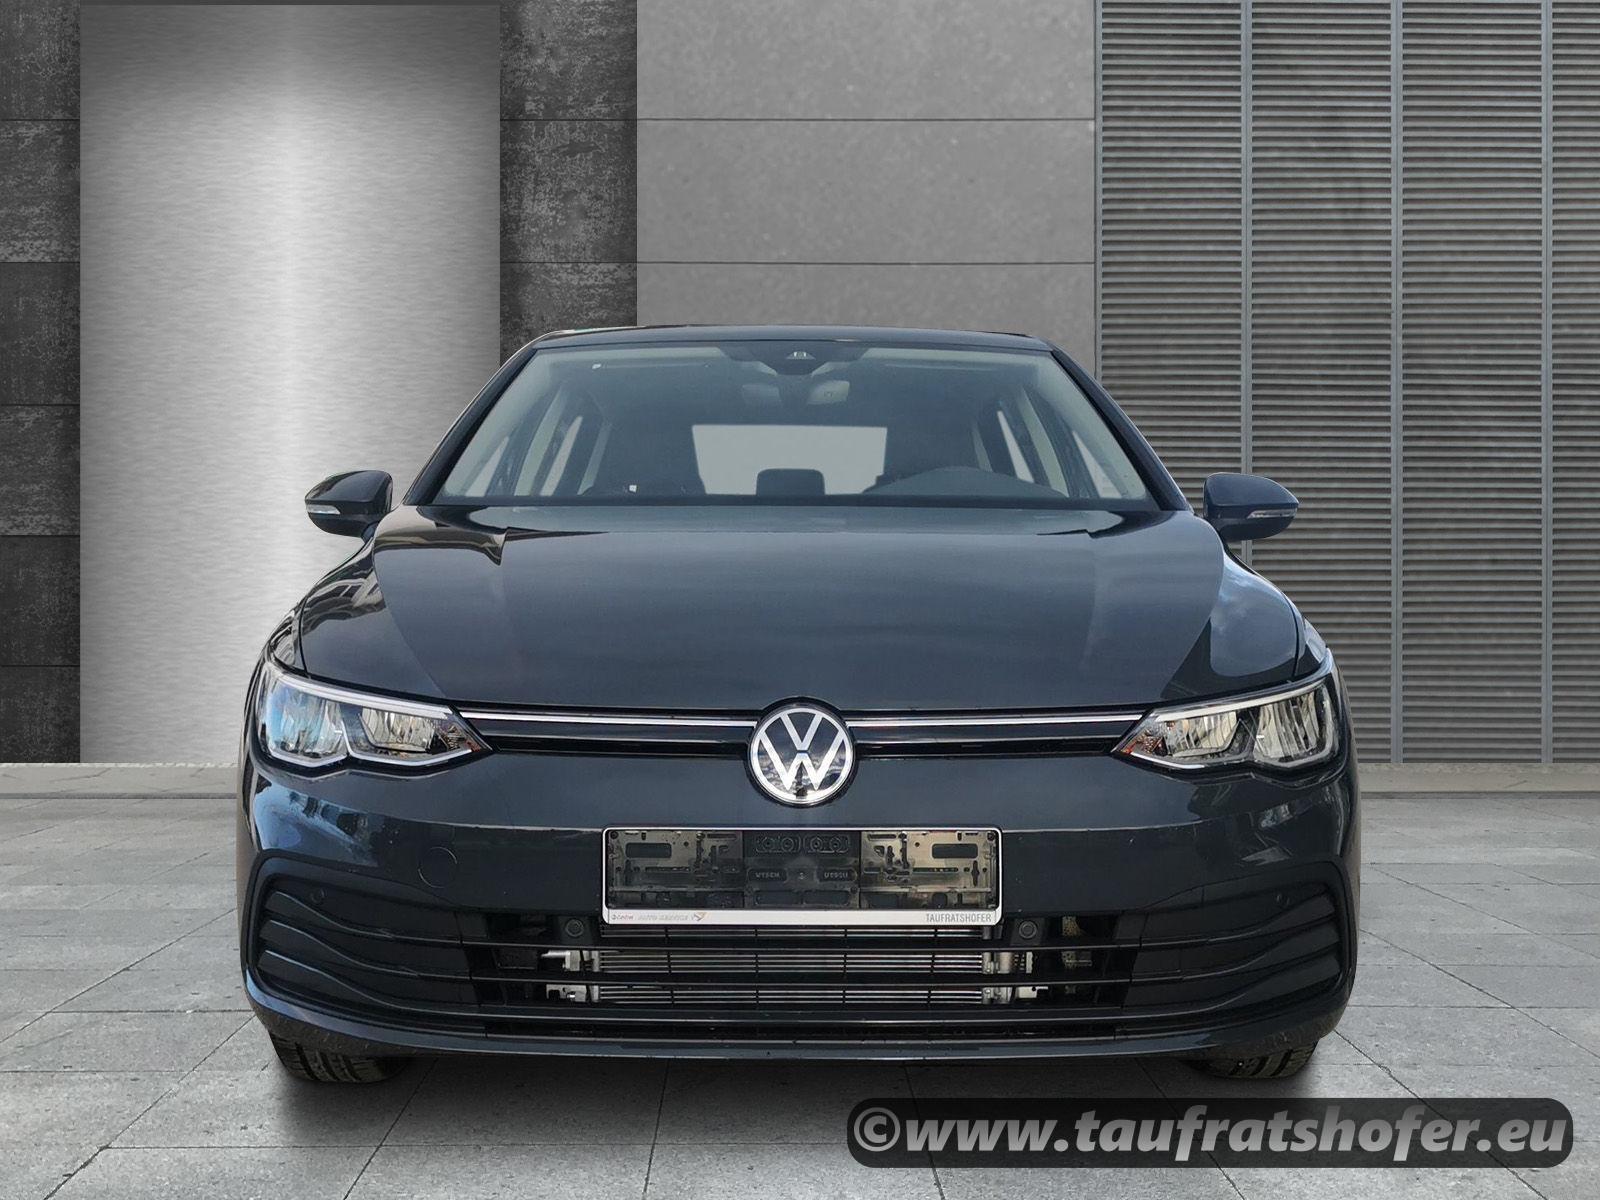 Volkswagen Golf STYLE 1.5 TSI 130 PS, LED Plus Scheinwerfer